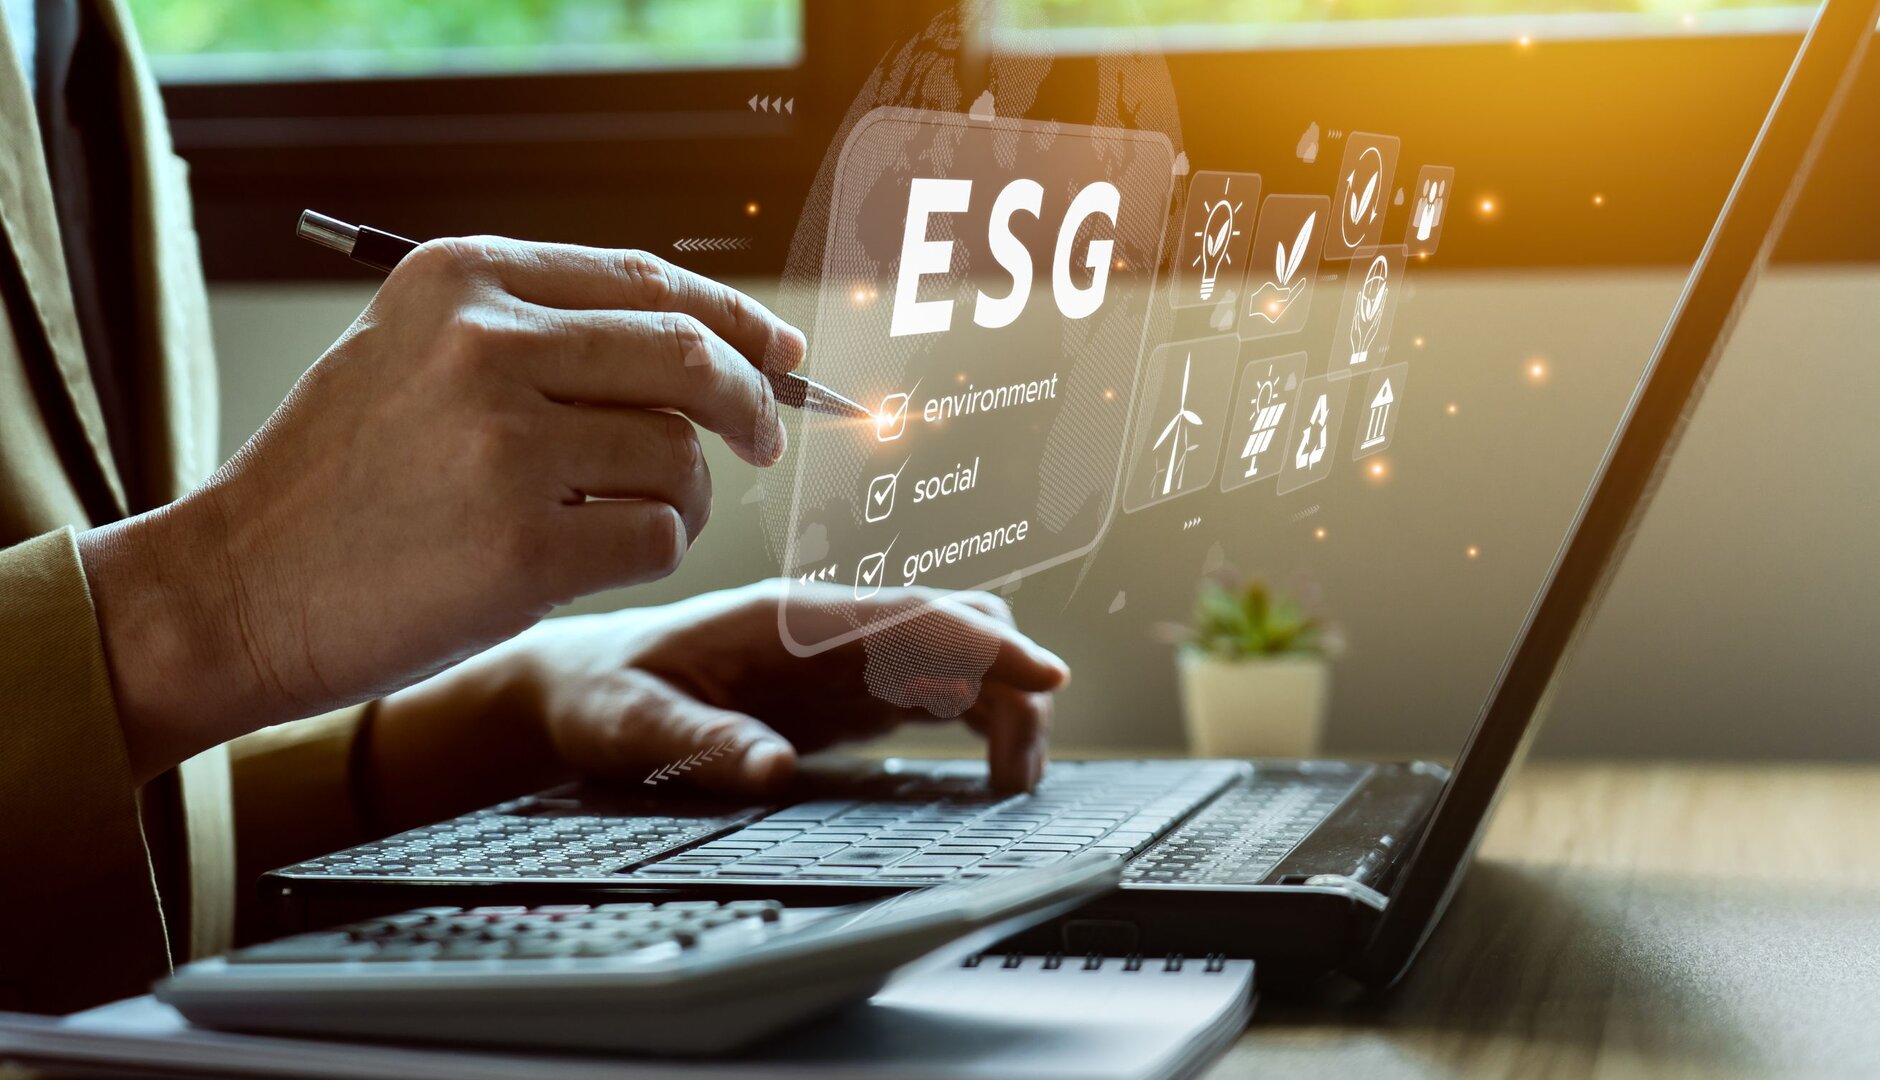 ESG job profiles, Laptop